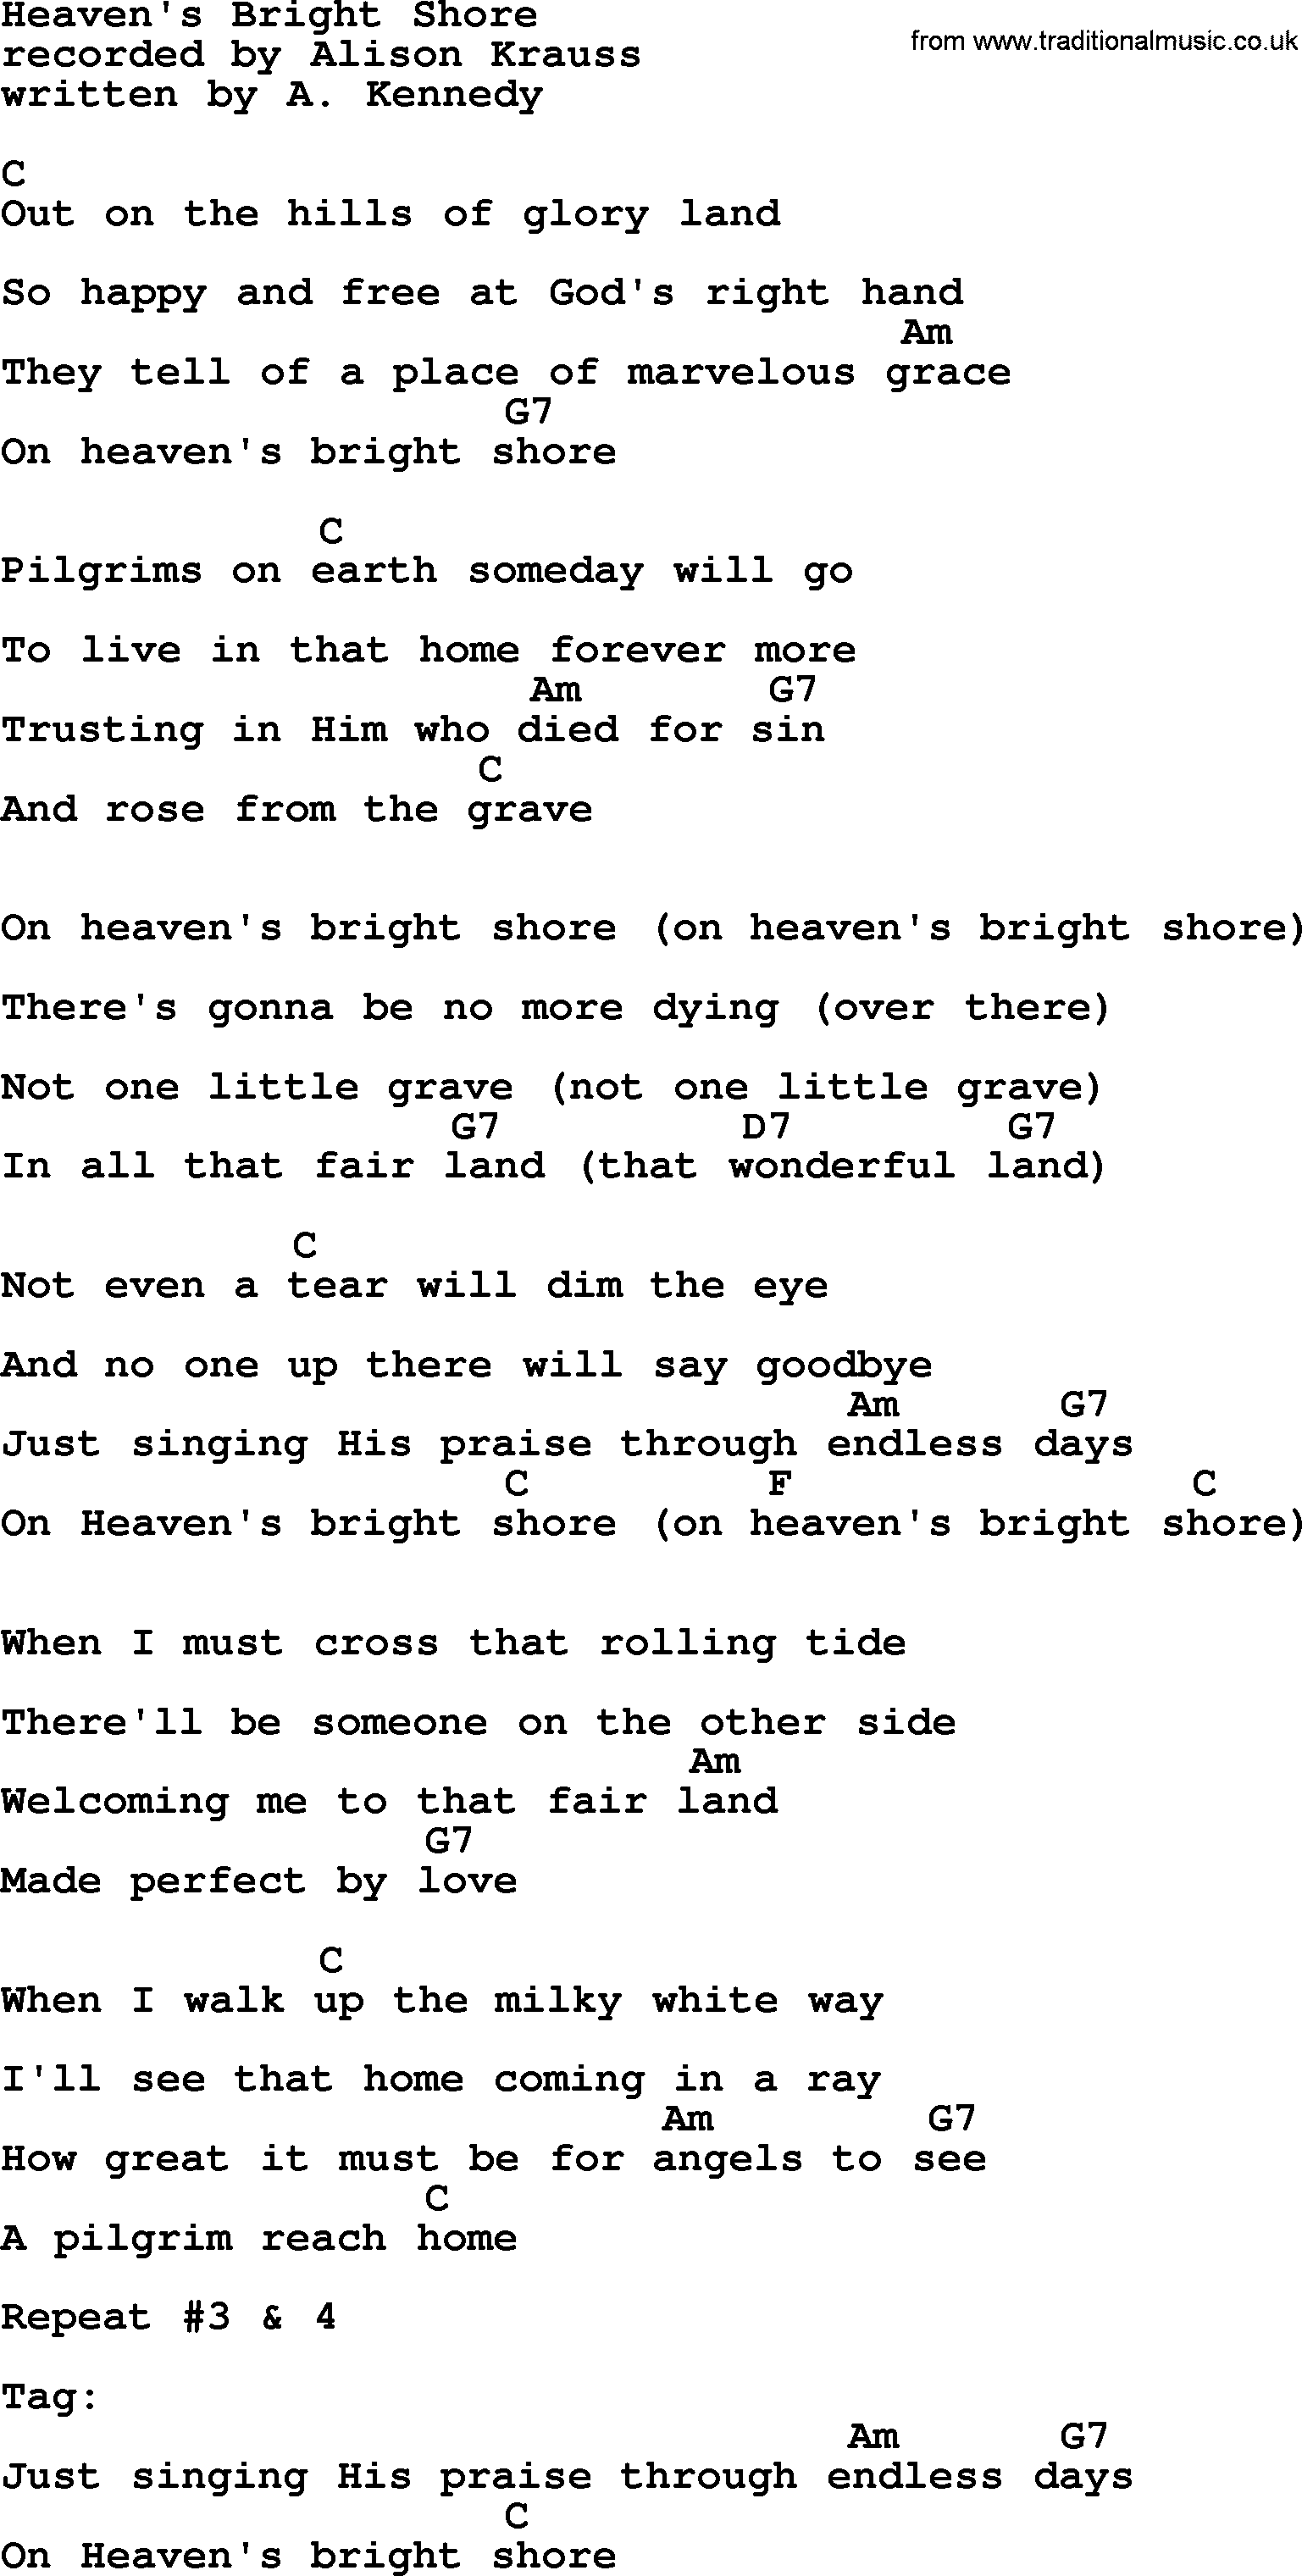 Heaven's Bright Shore 2 - Bluegrass lyrics with chords